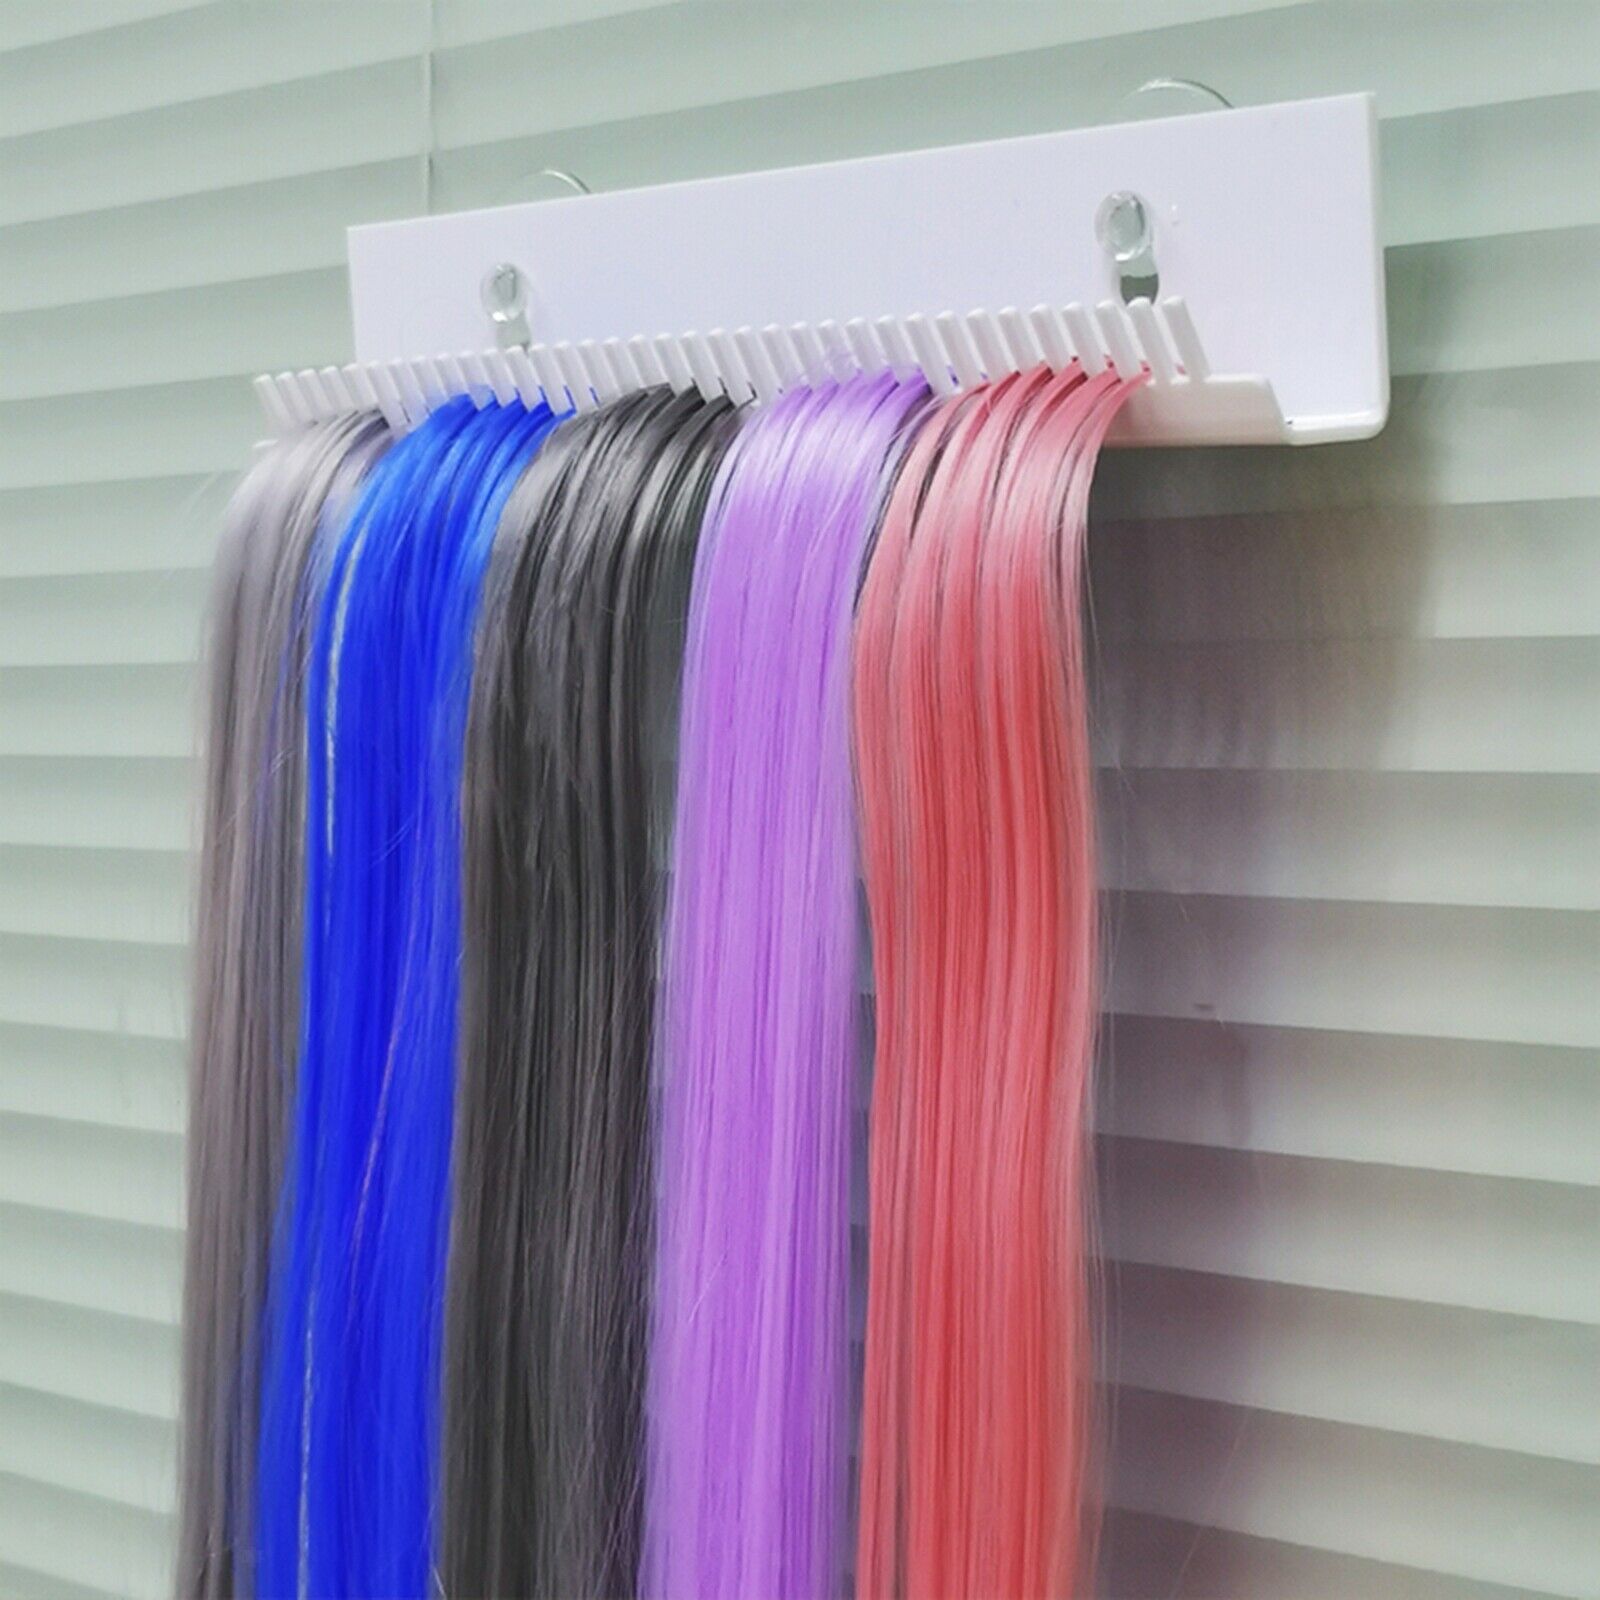 2X Hair Salon Spa Hair Extensions Display Storage Holder for Braiding Weaving